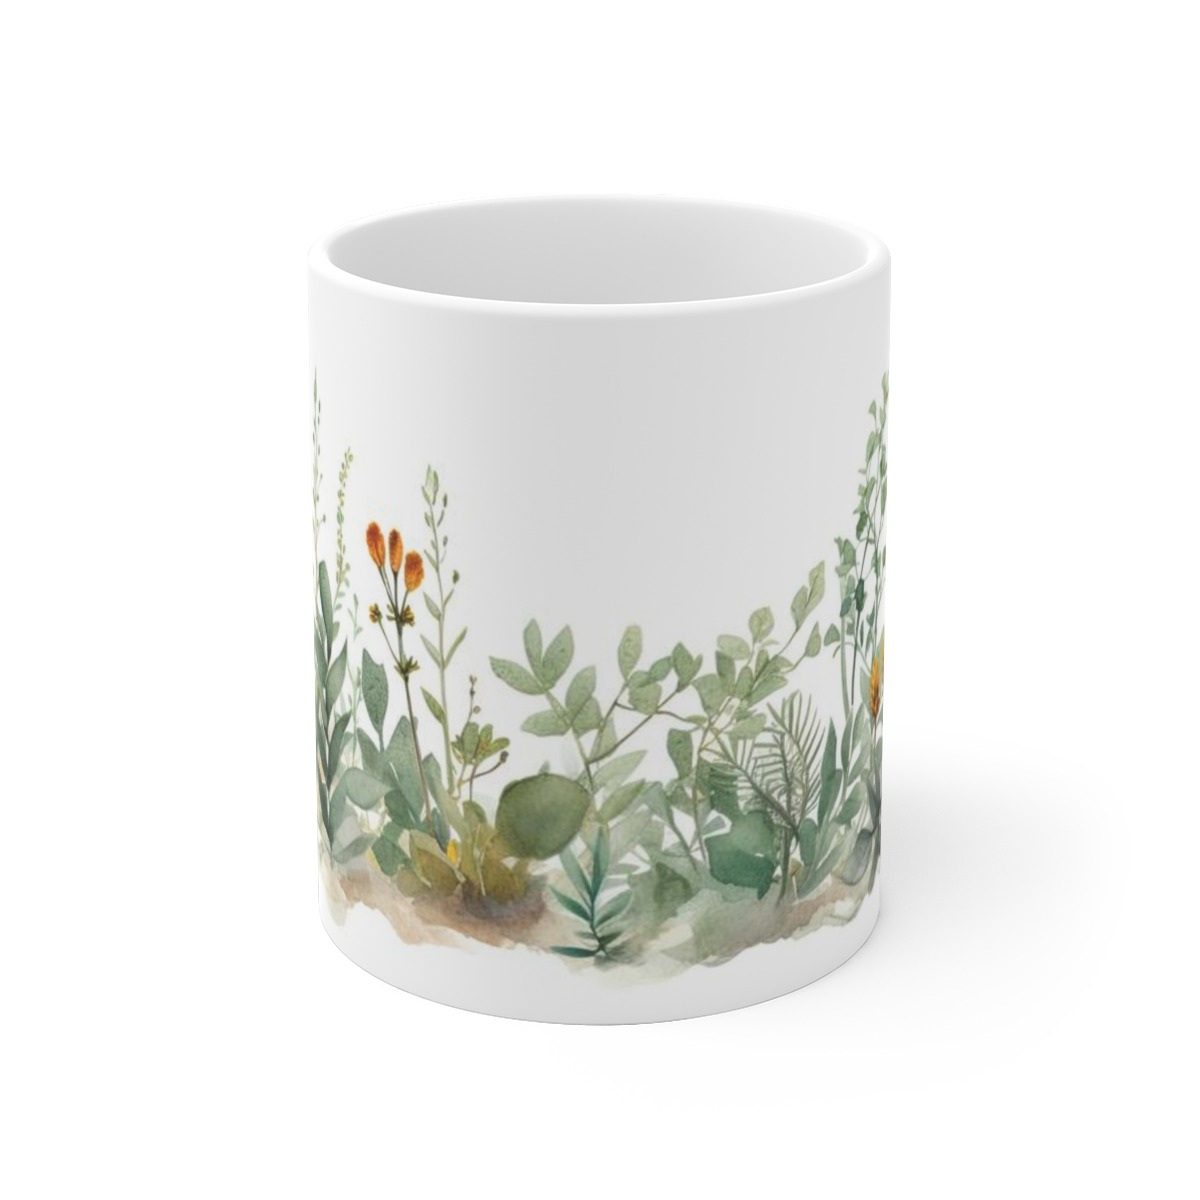 Bedruckte Kaffeetasse mit Aquarell-Pflanzendesign